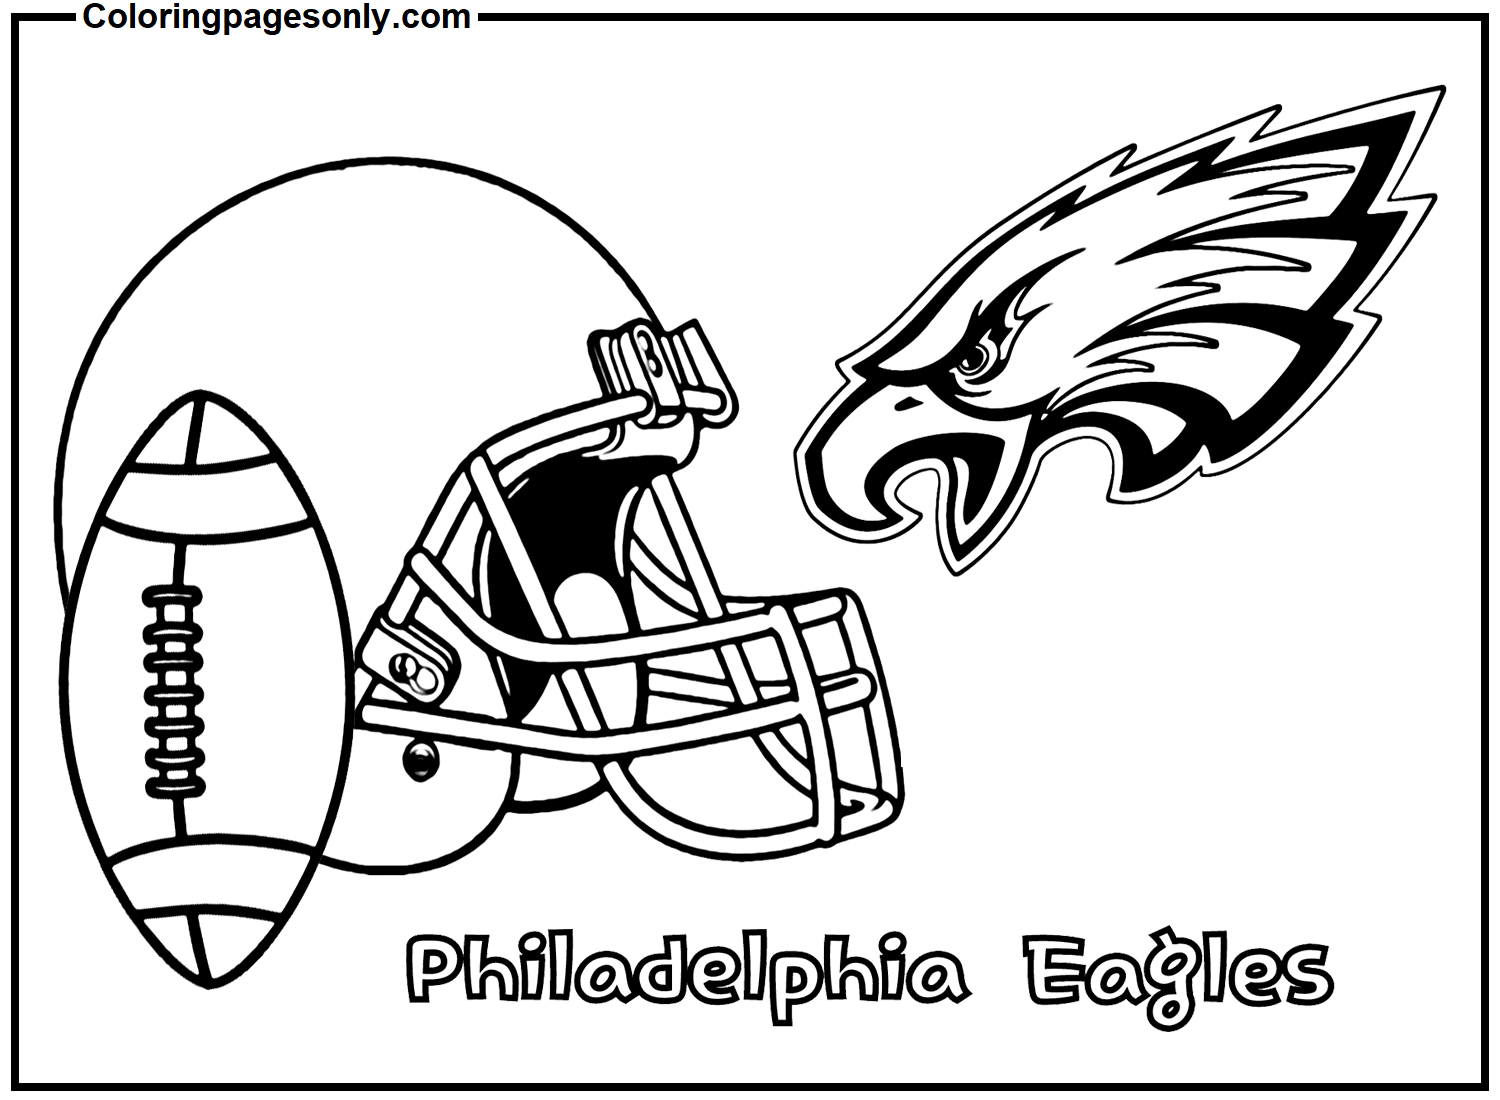 Philadelphia Eagles Picture from Philadelphia Eagles